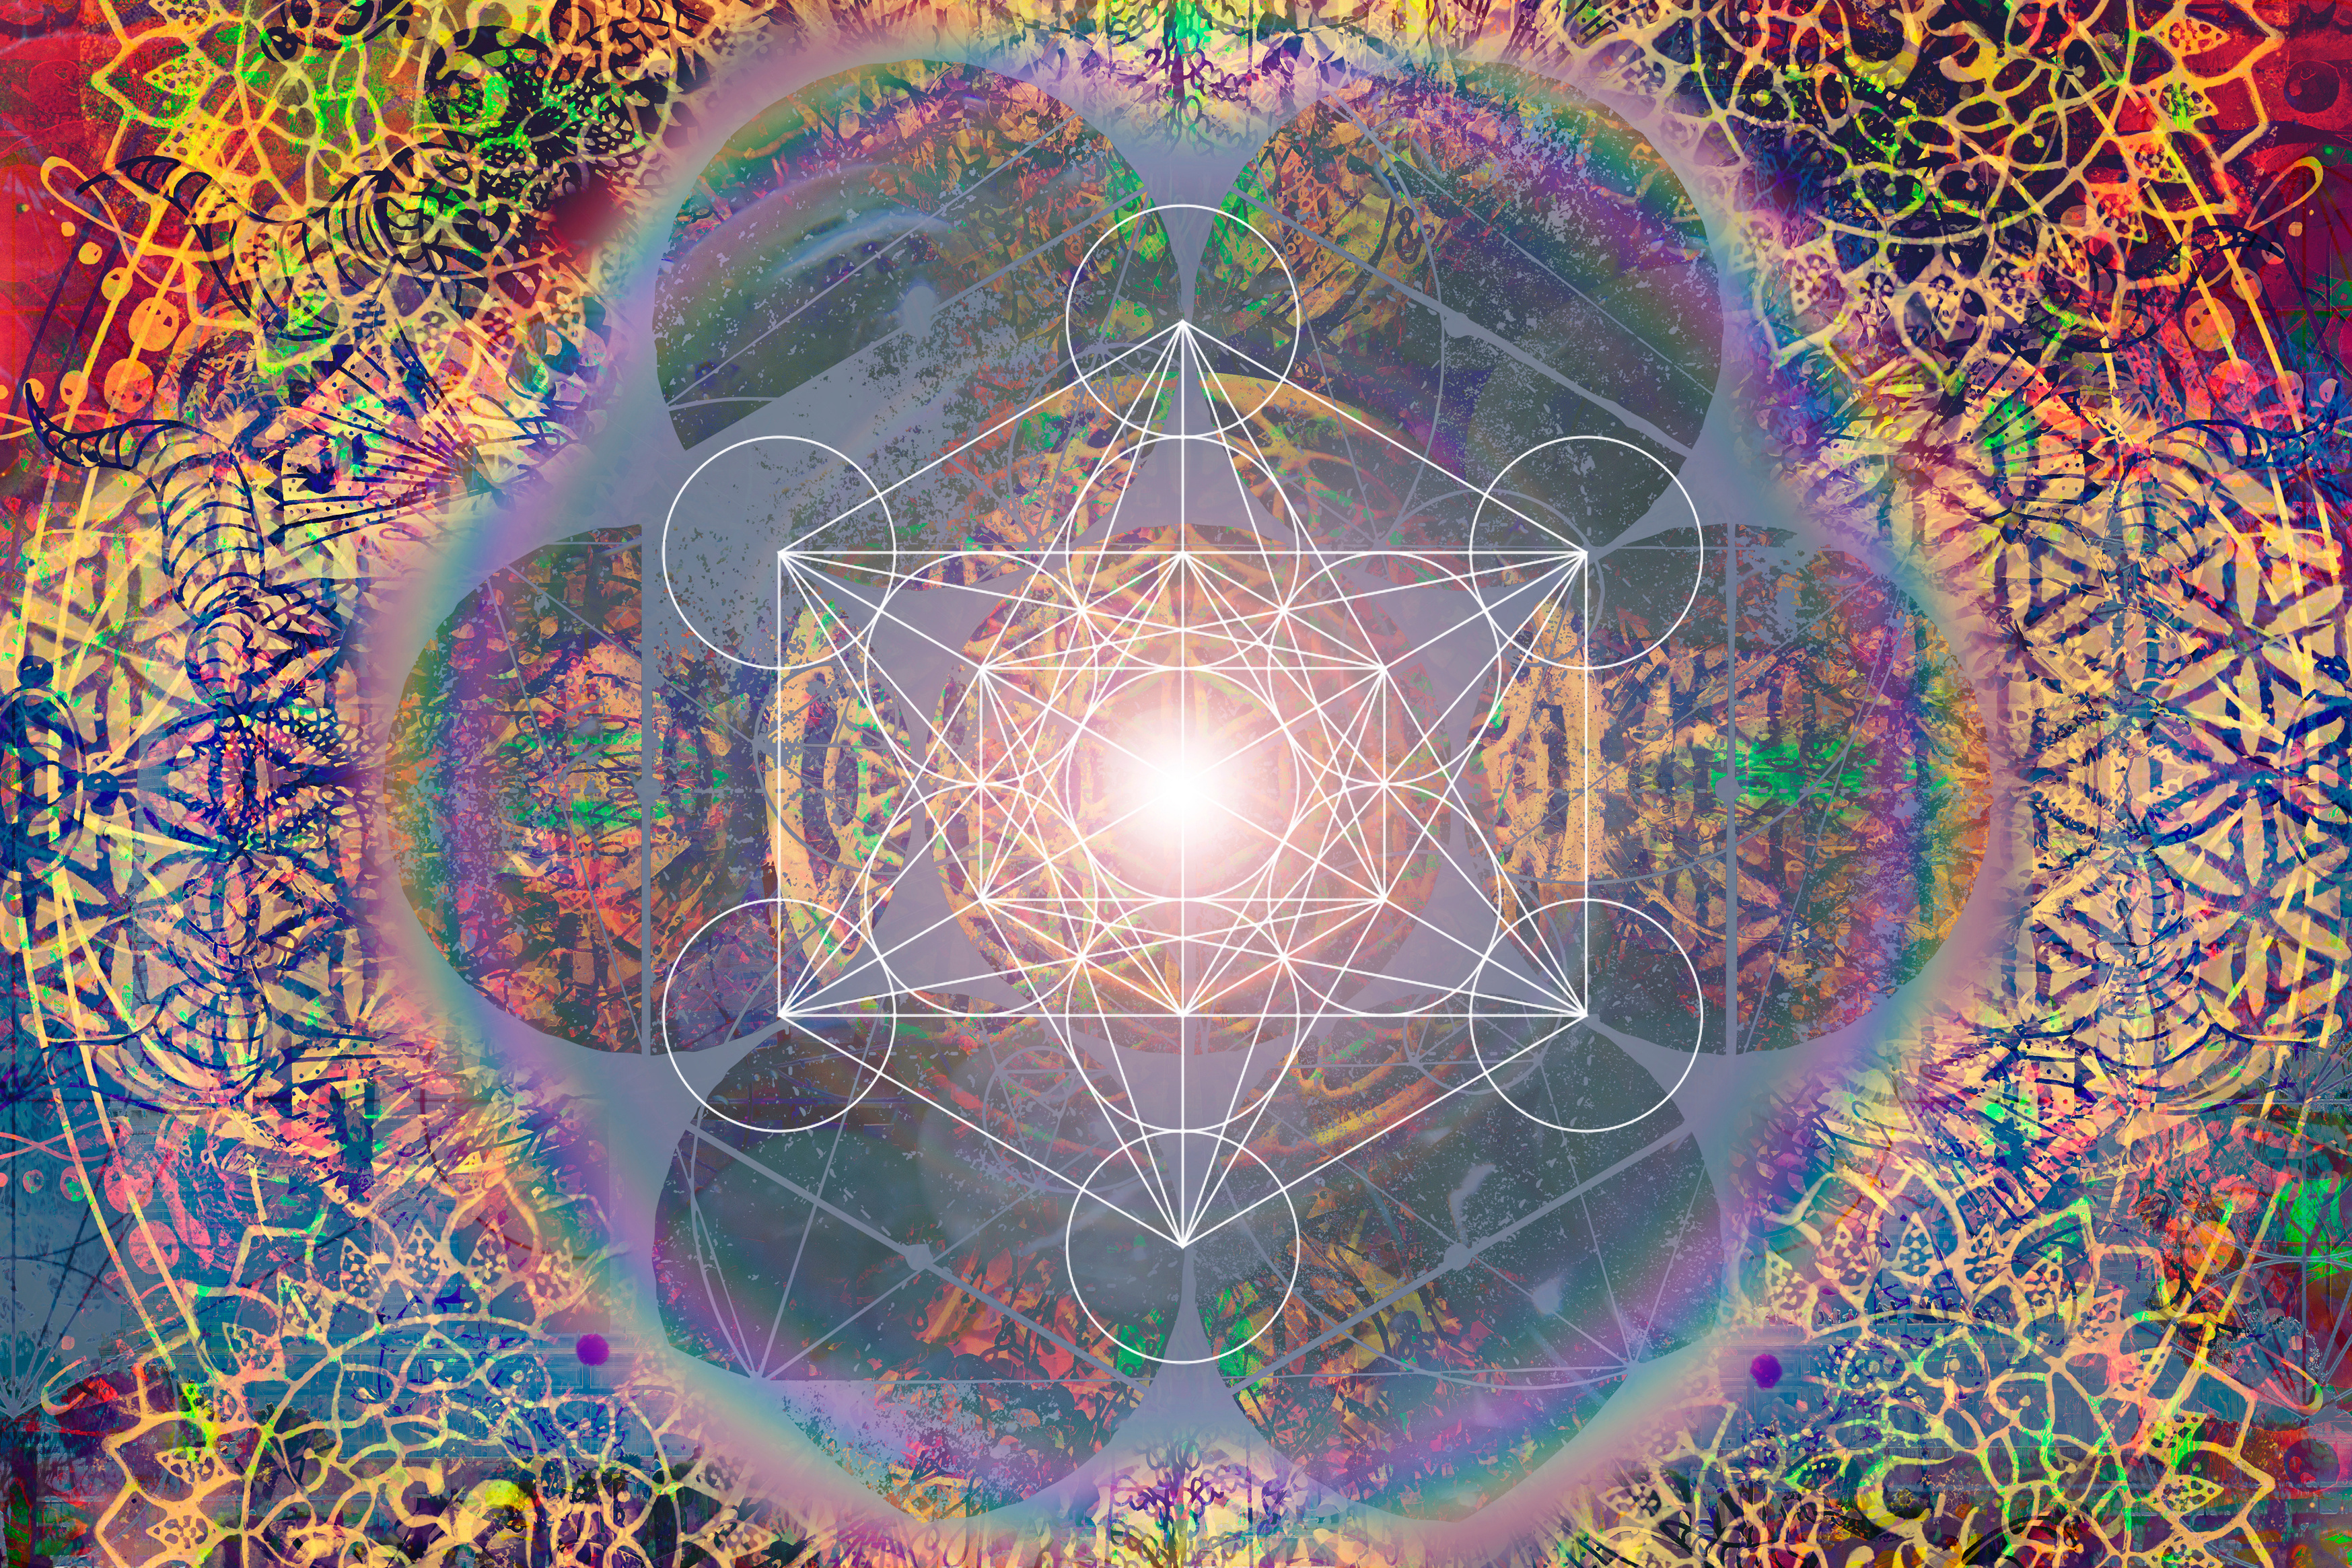 Abstract colorful sacred geometry graphic mandala